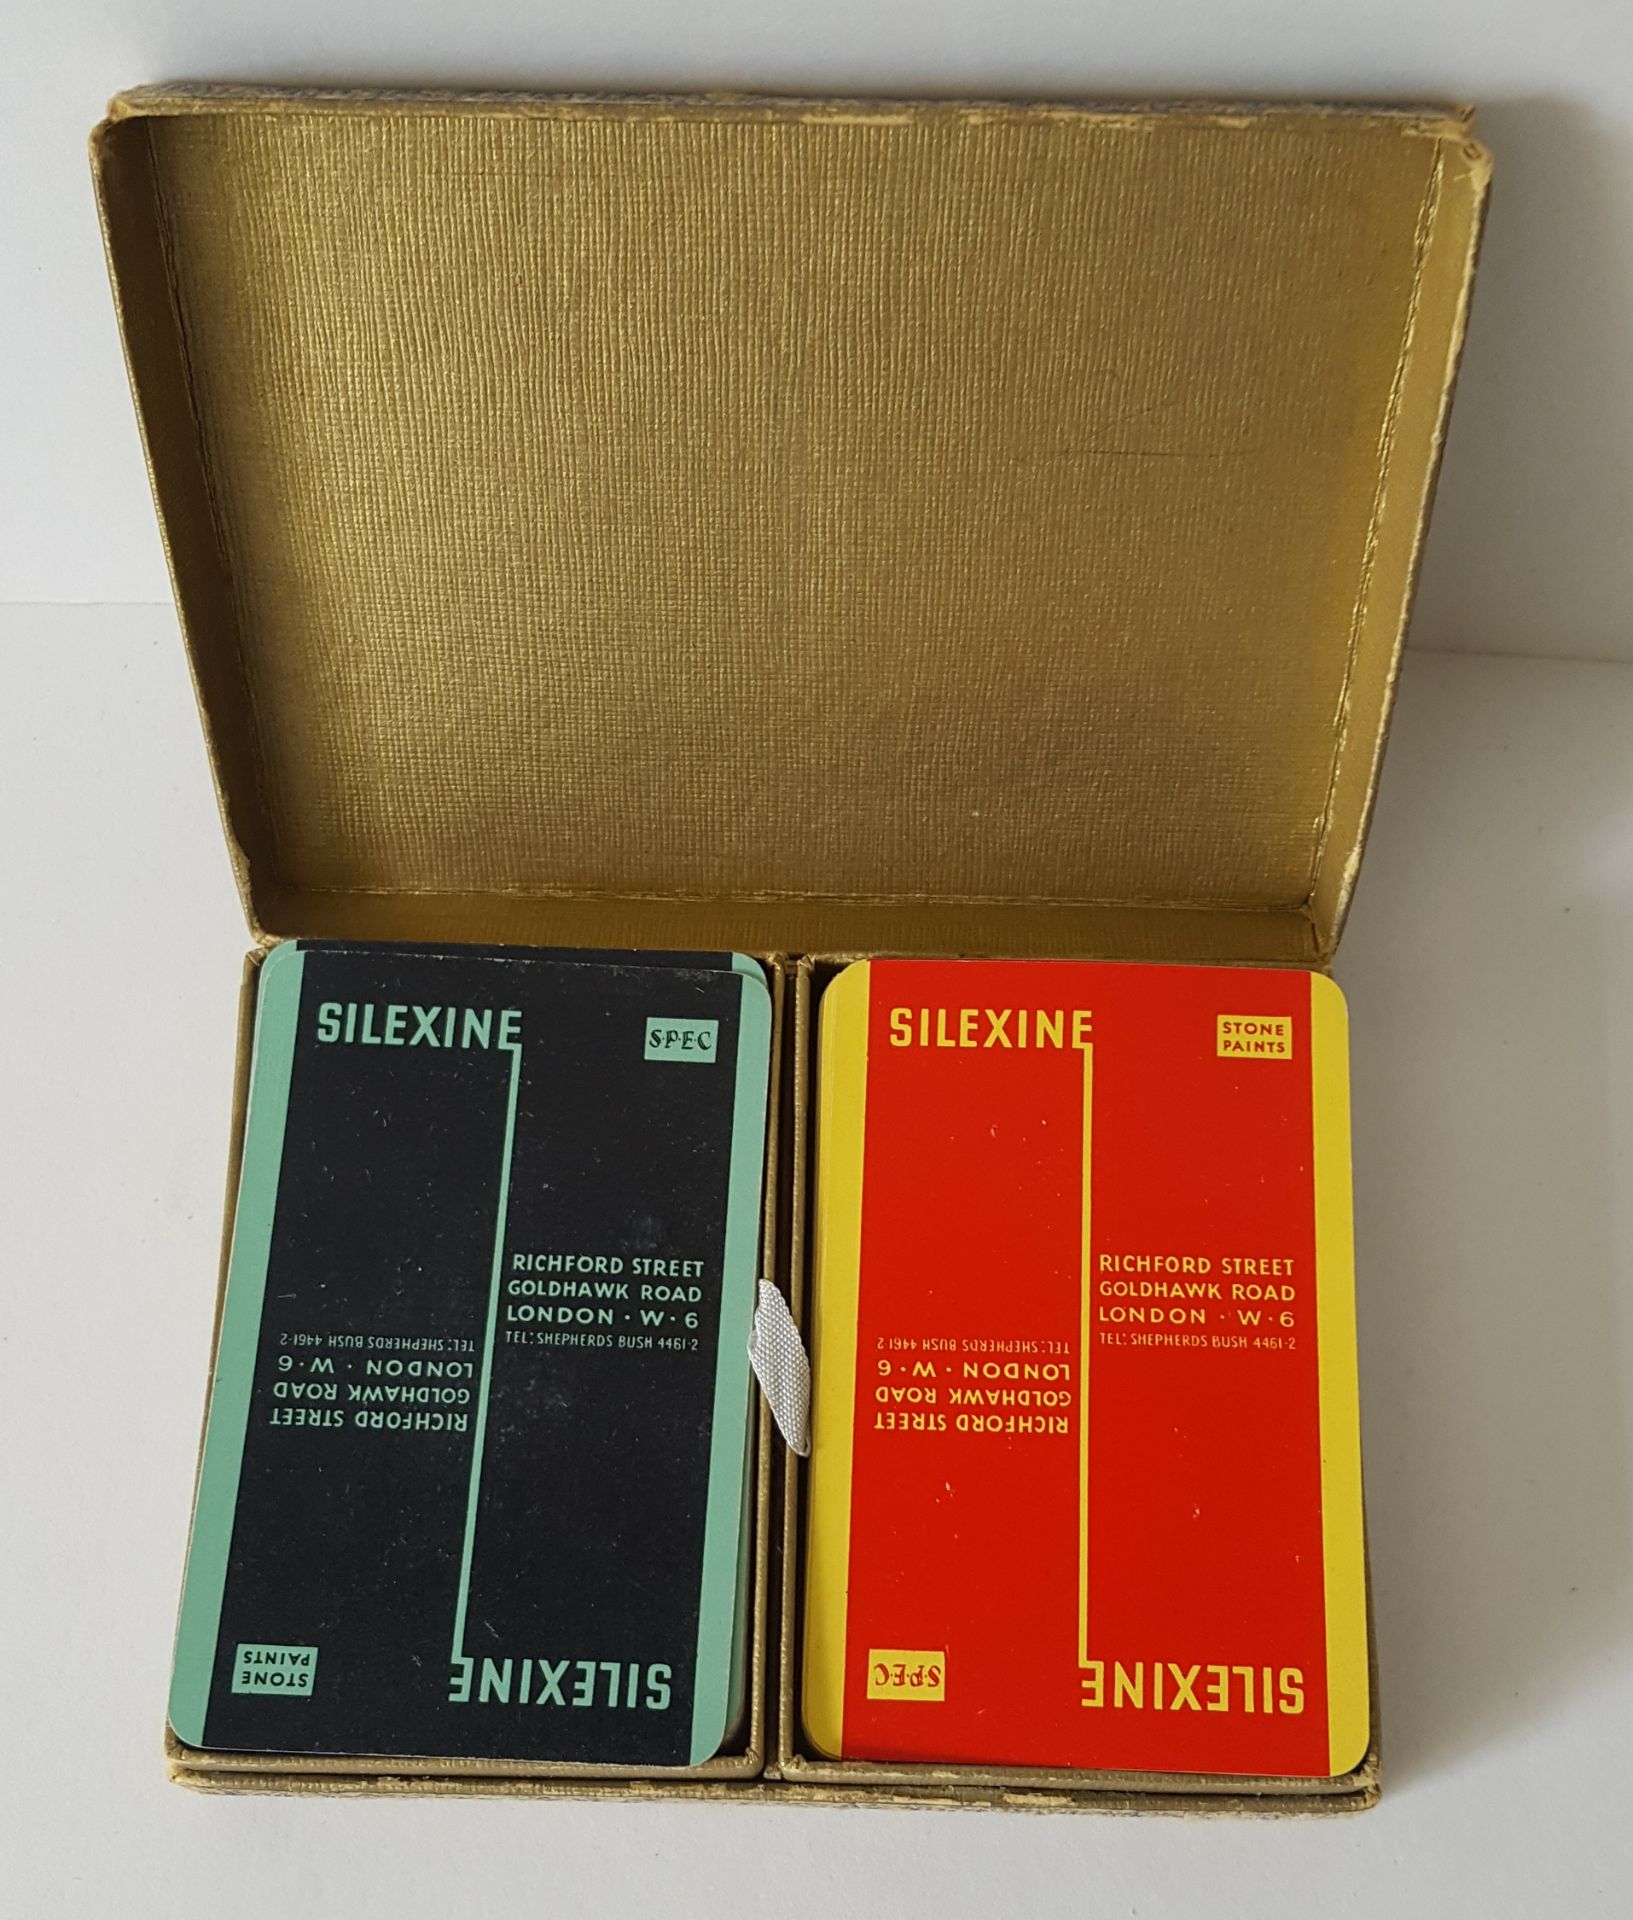 Vintage Retro Collectable Playing Cards 1 x De La Rue 1 x Waddingtons - Image 4 of 4